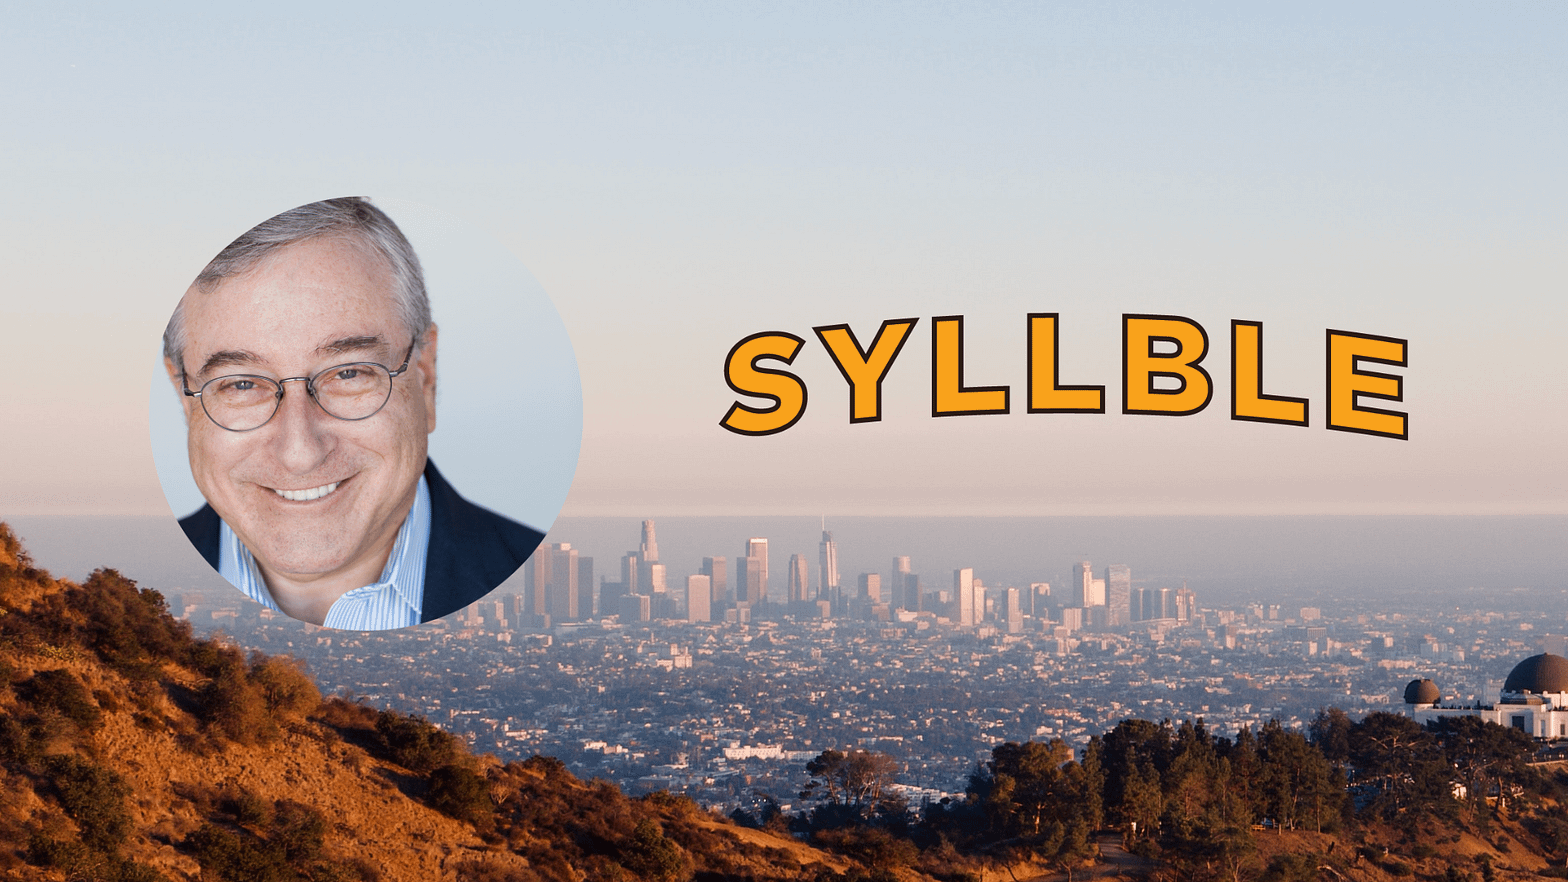 Sandy Climan joins Syllble Inc. Advisory Board